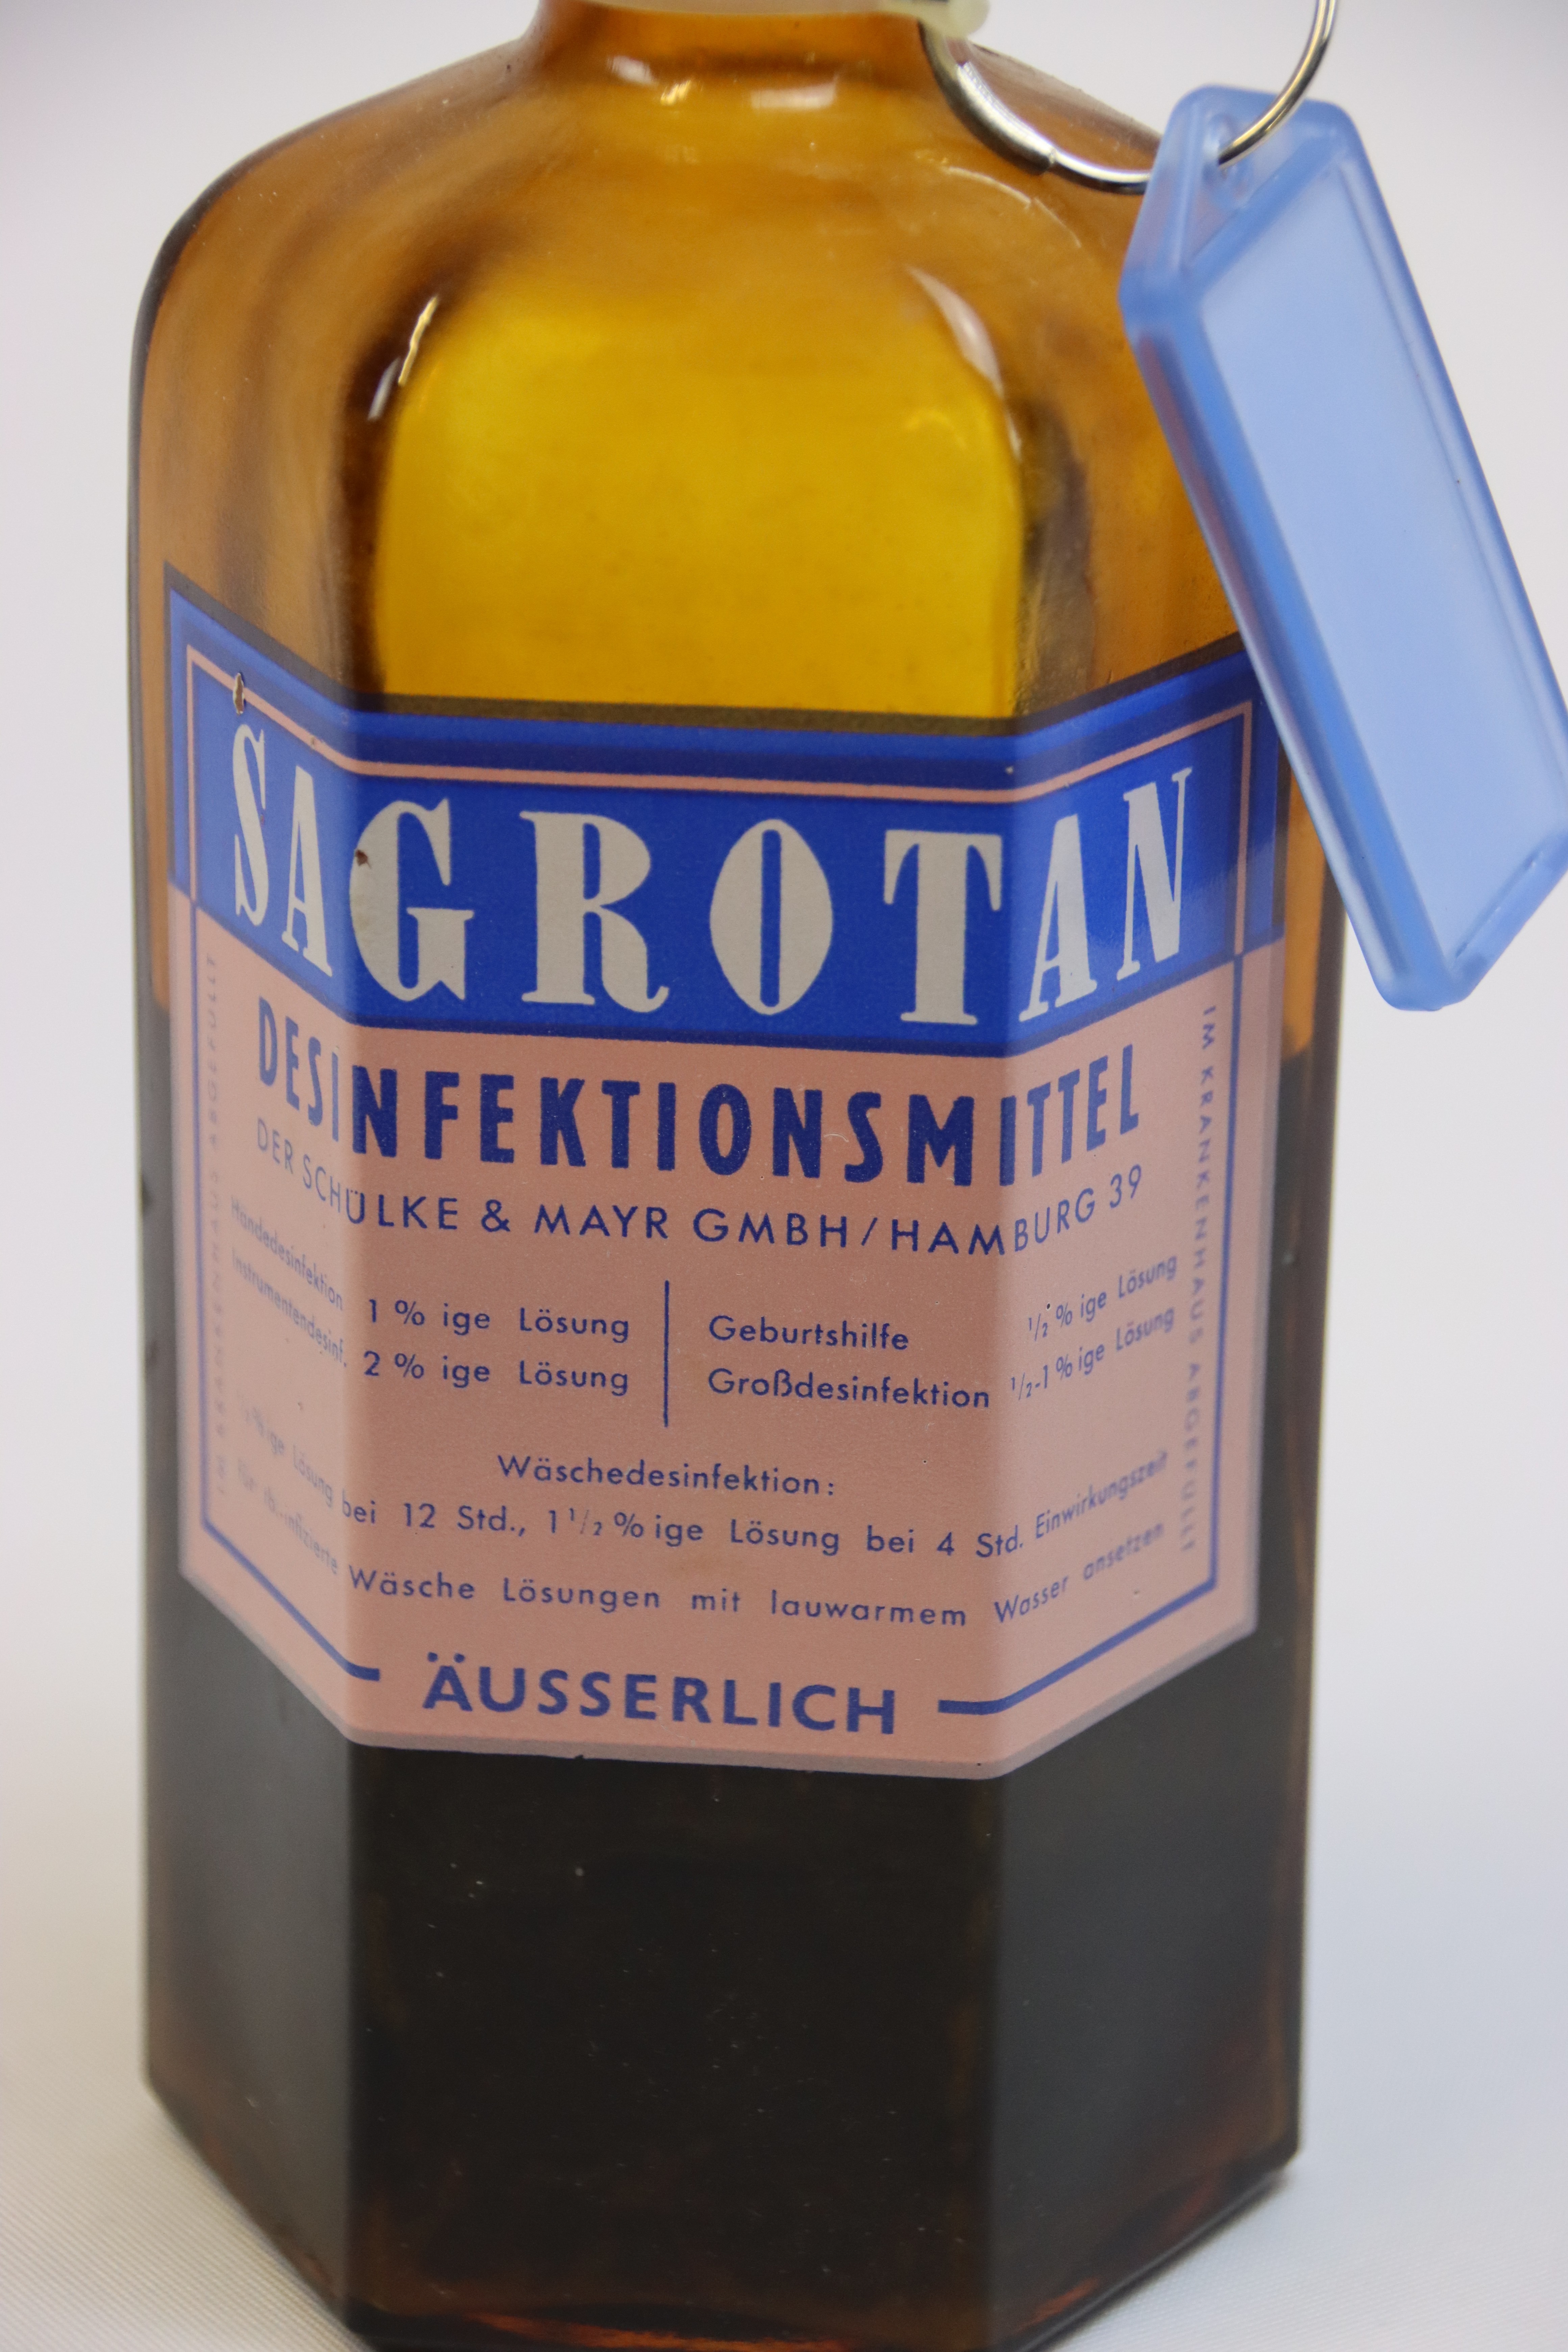 Sagrotan Desinfektionsmittel (Krankenhausmuseum Bielefeld e.V. CC BY-NC-SA)